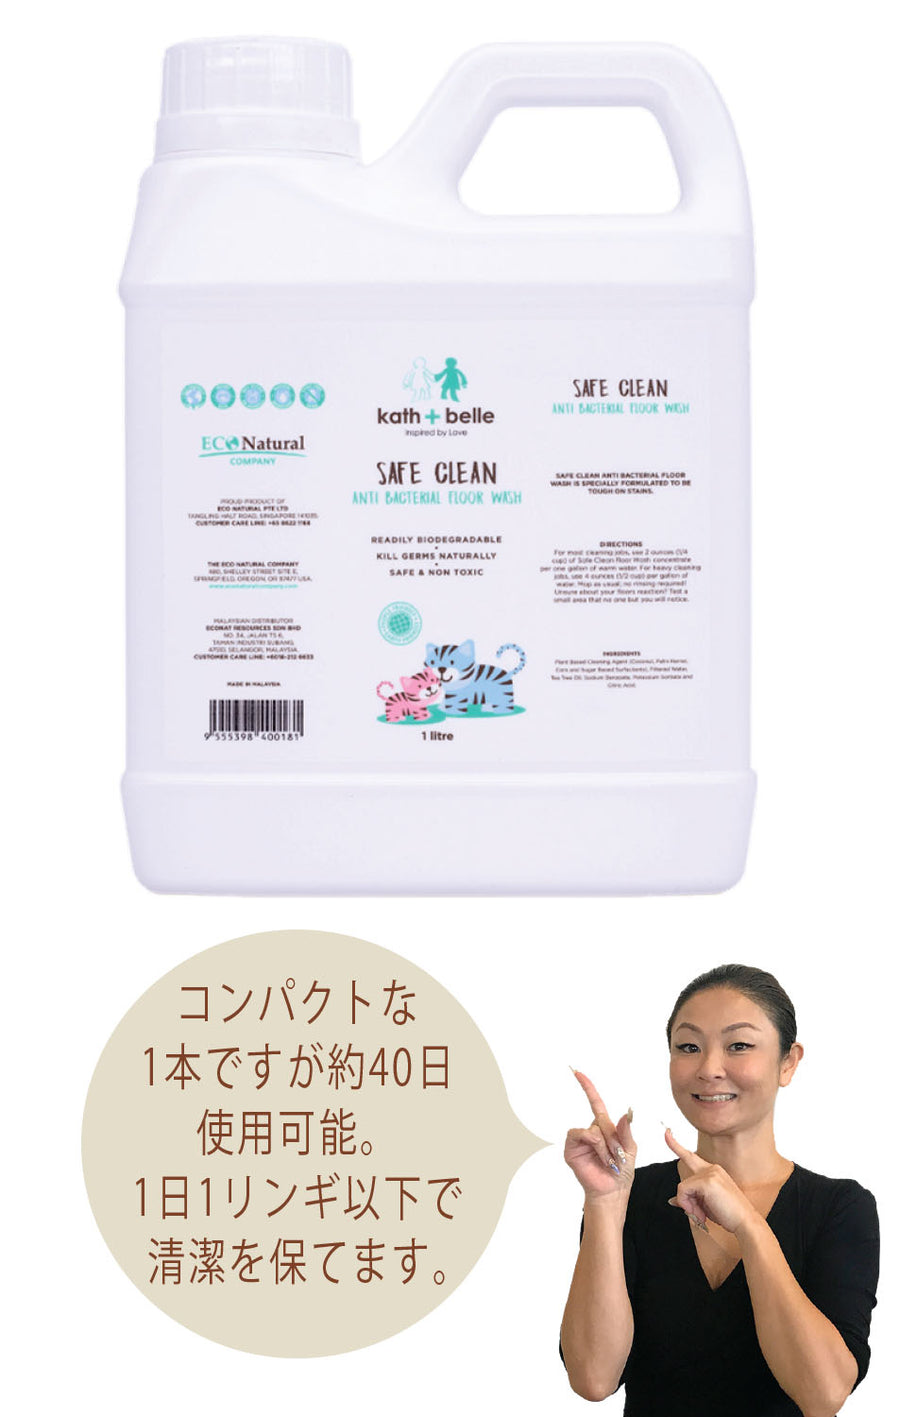 Safe Clean Anti Bacterial Floor Wash 1L